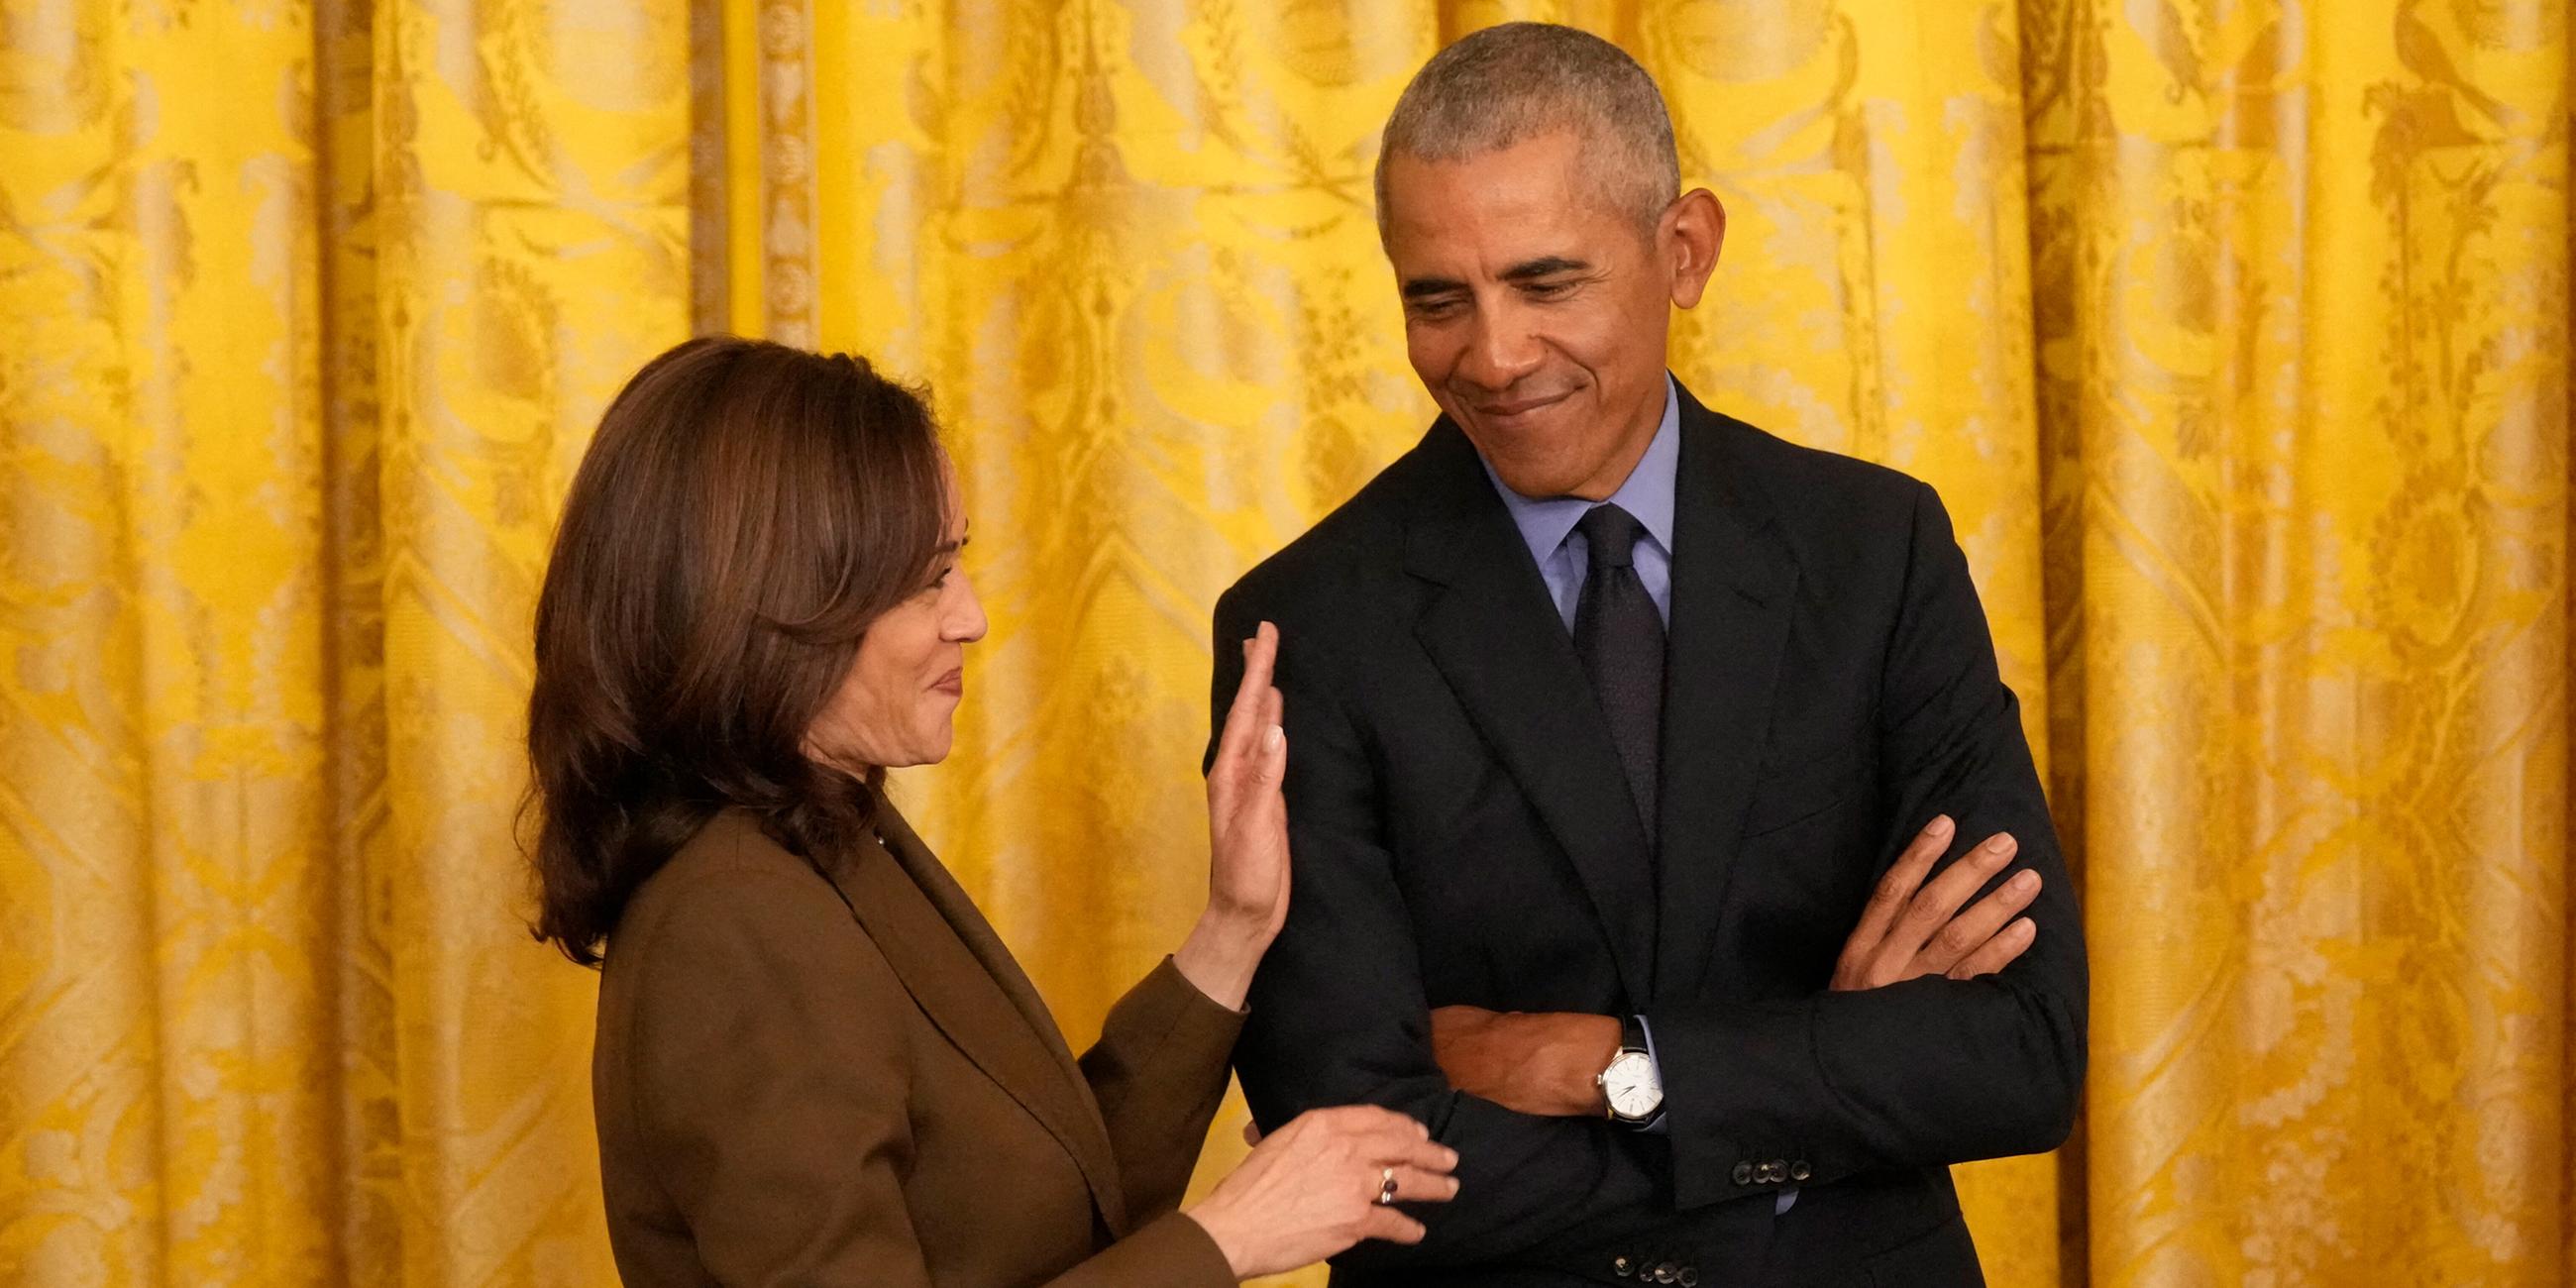 Archivfoto: US-Vizepräsidentin Kamala Harris und ehemaliger US-Präsident Barack Obama am 05.04.2022